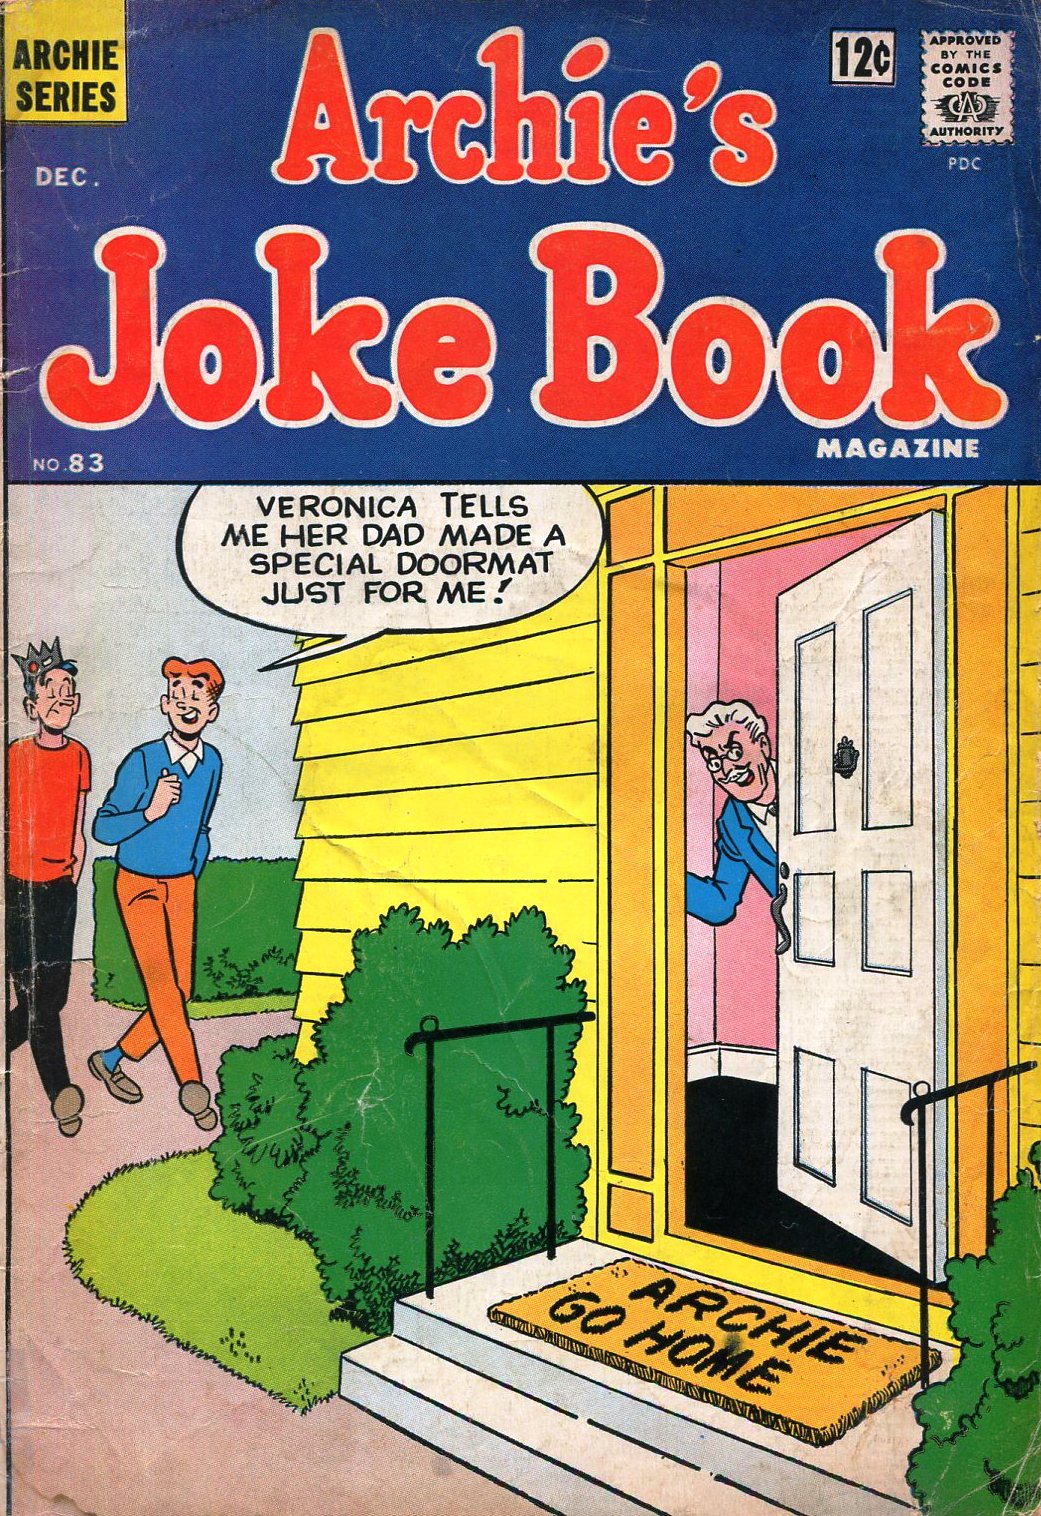 Archie's Joke Book Magazine issue 83 - Page 1